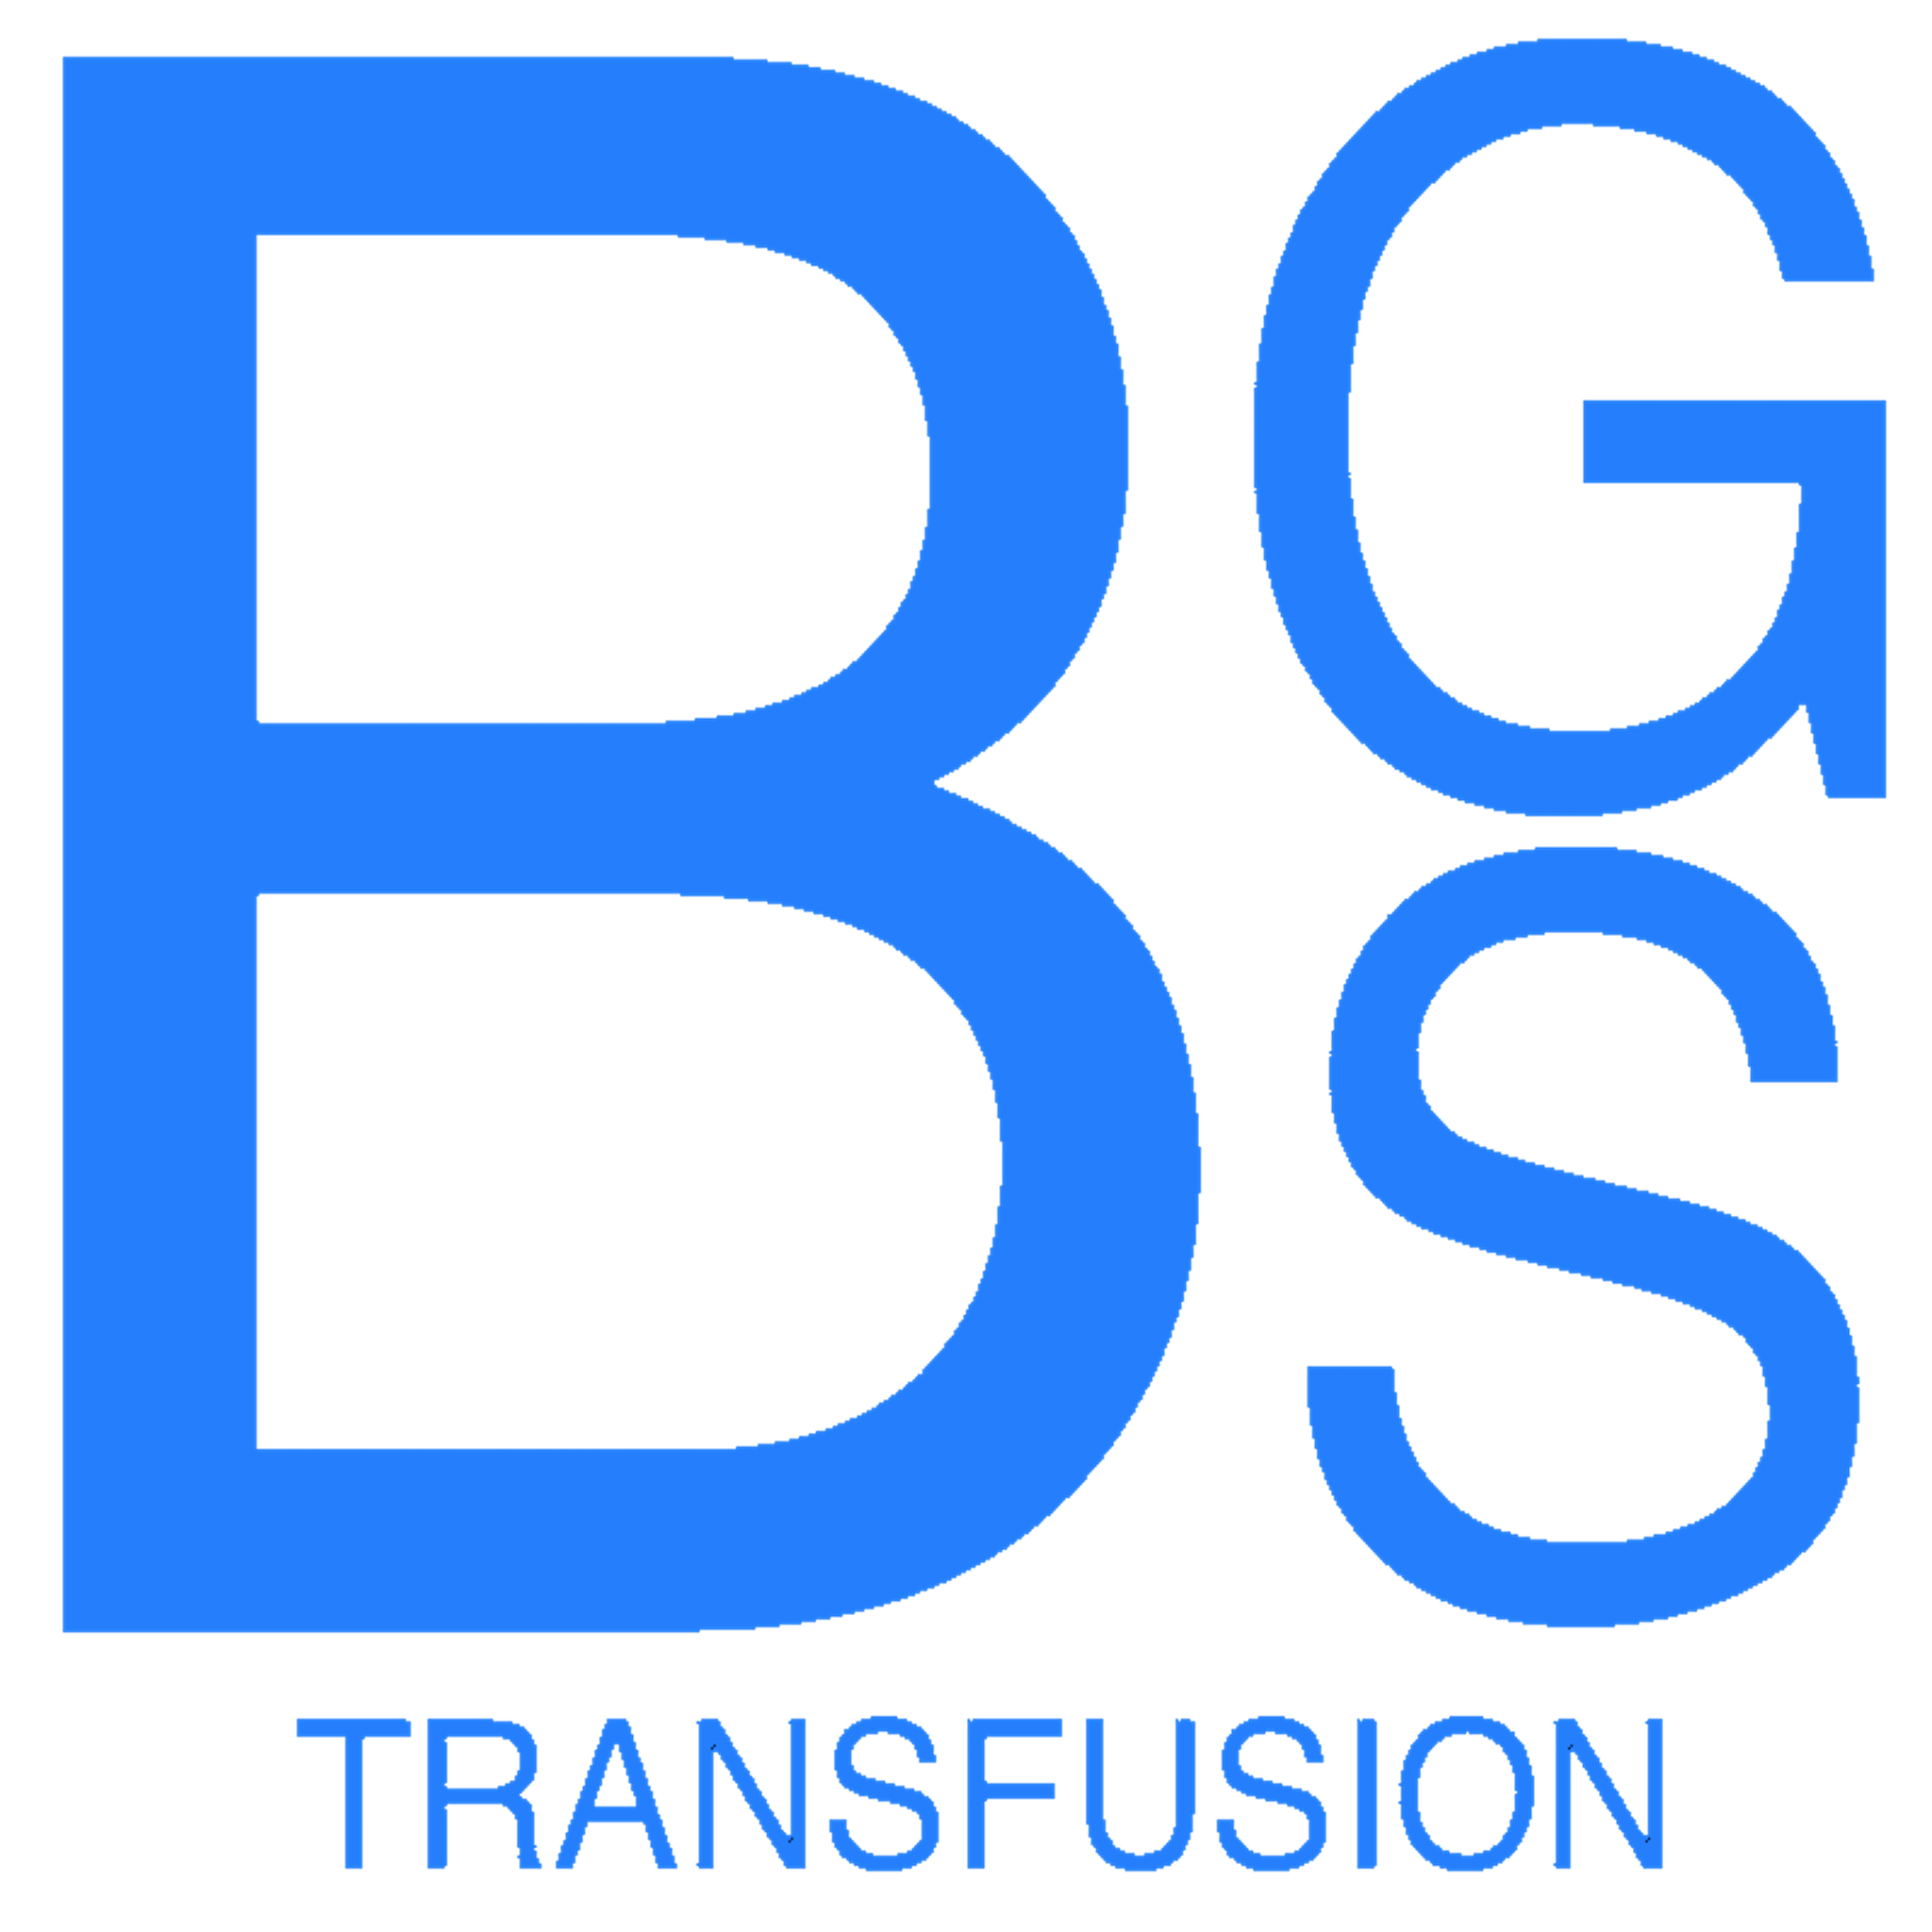 BGS Transfusion Logo